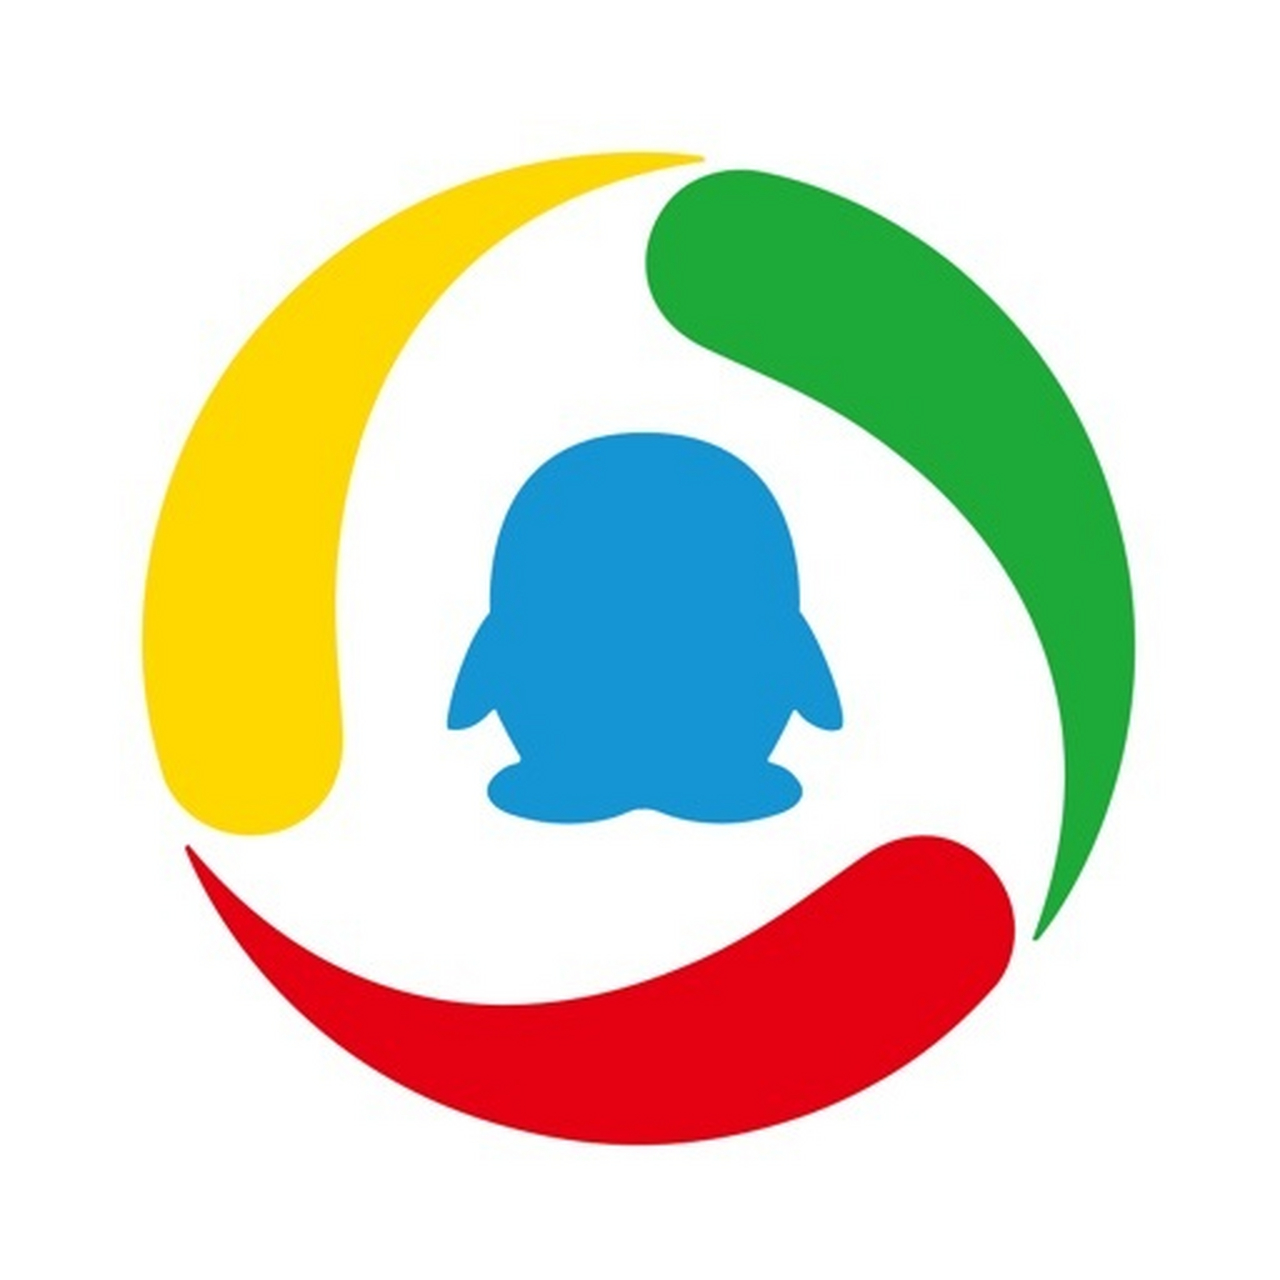 Tencent腾讯logo图片